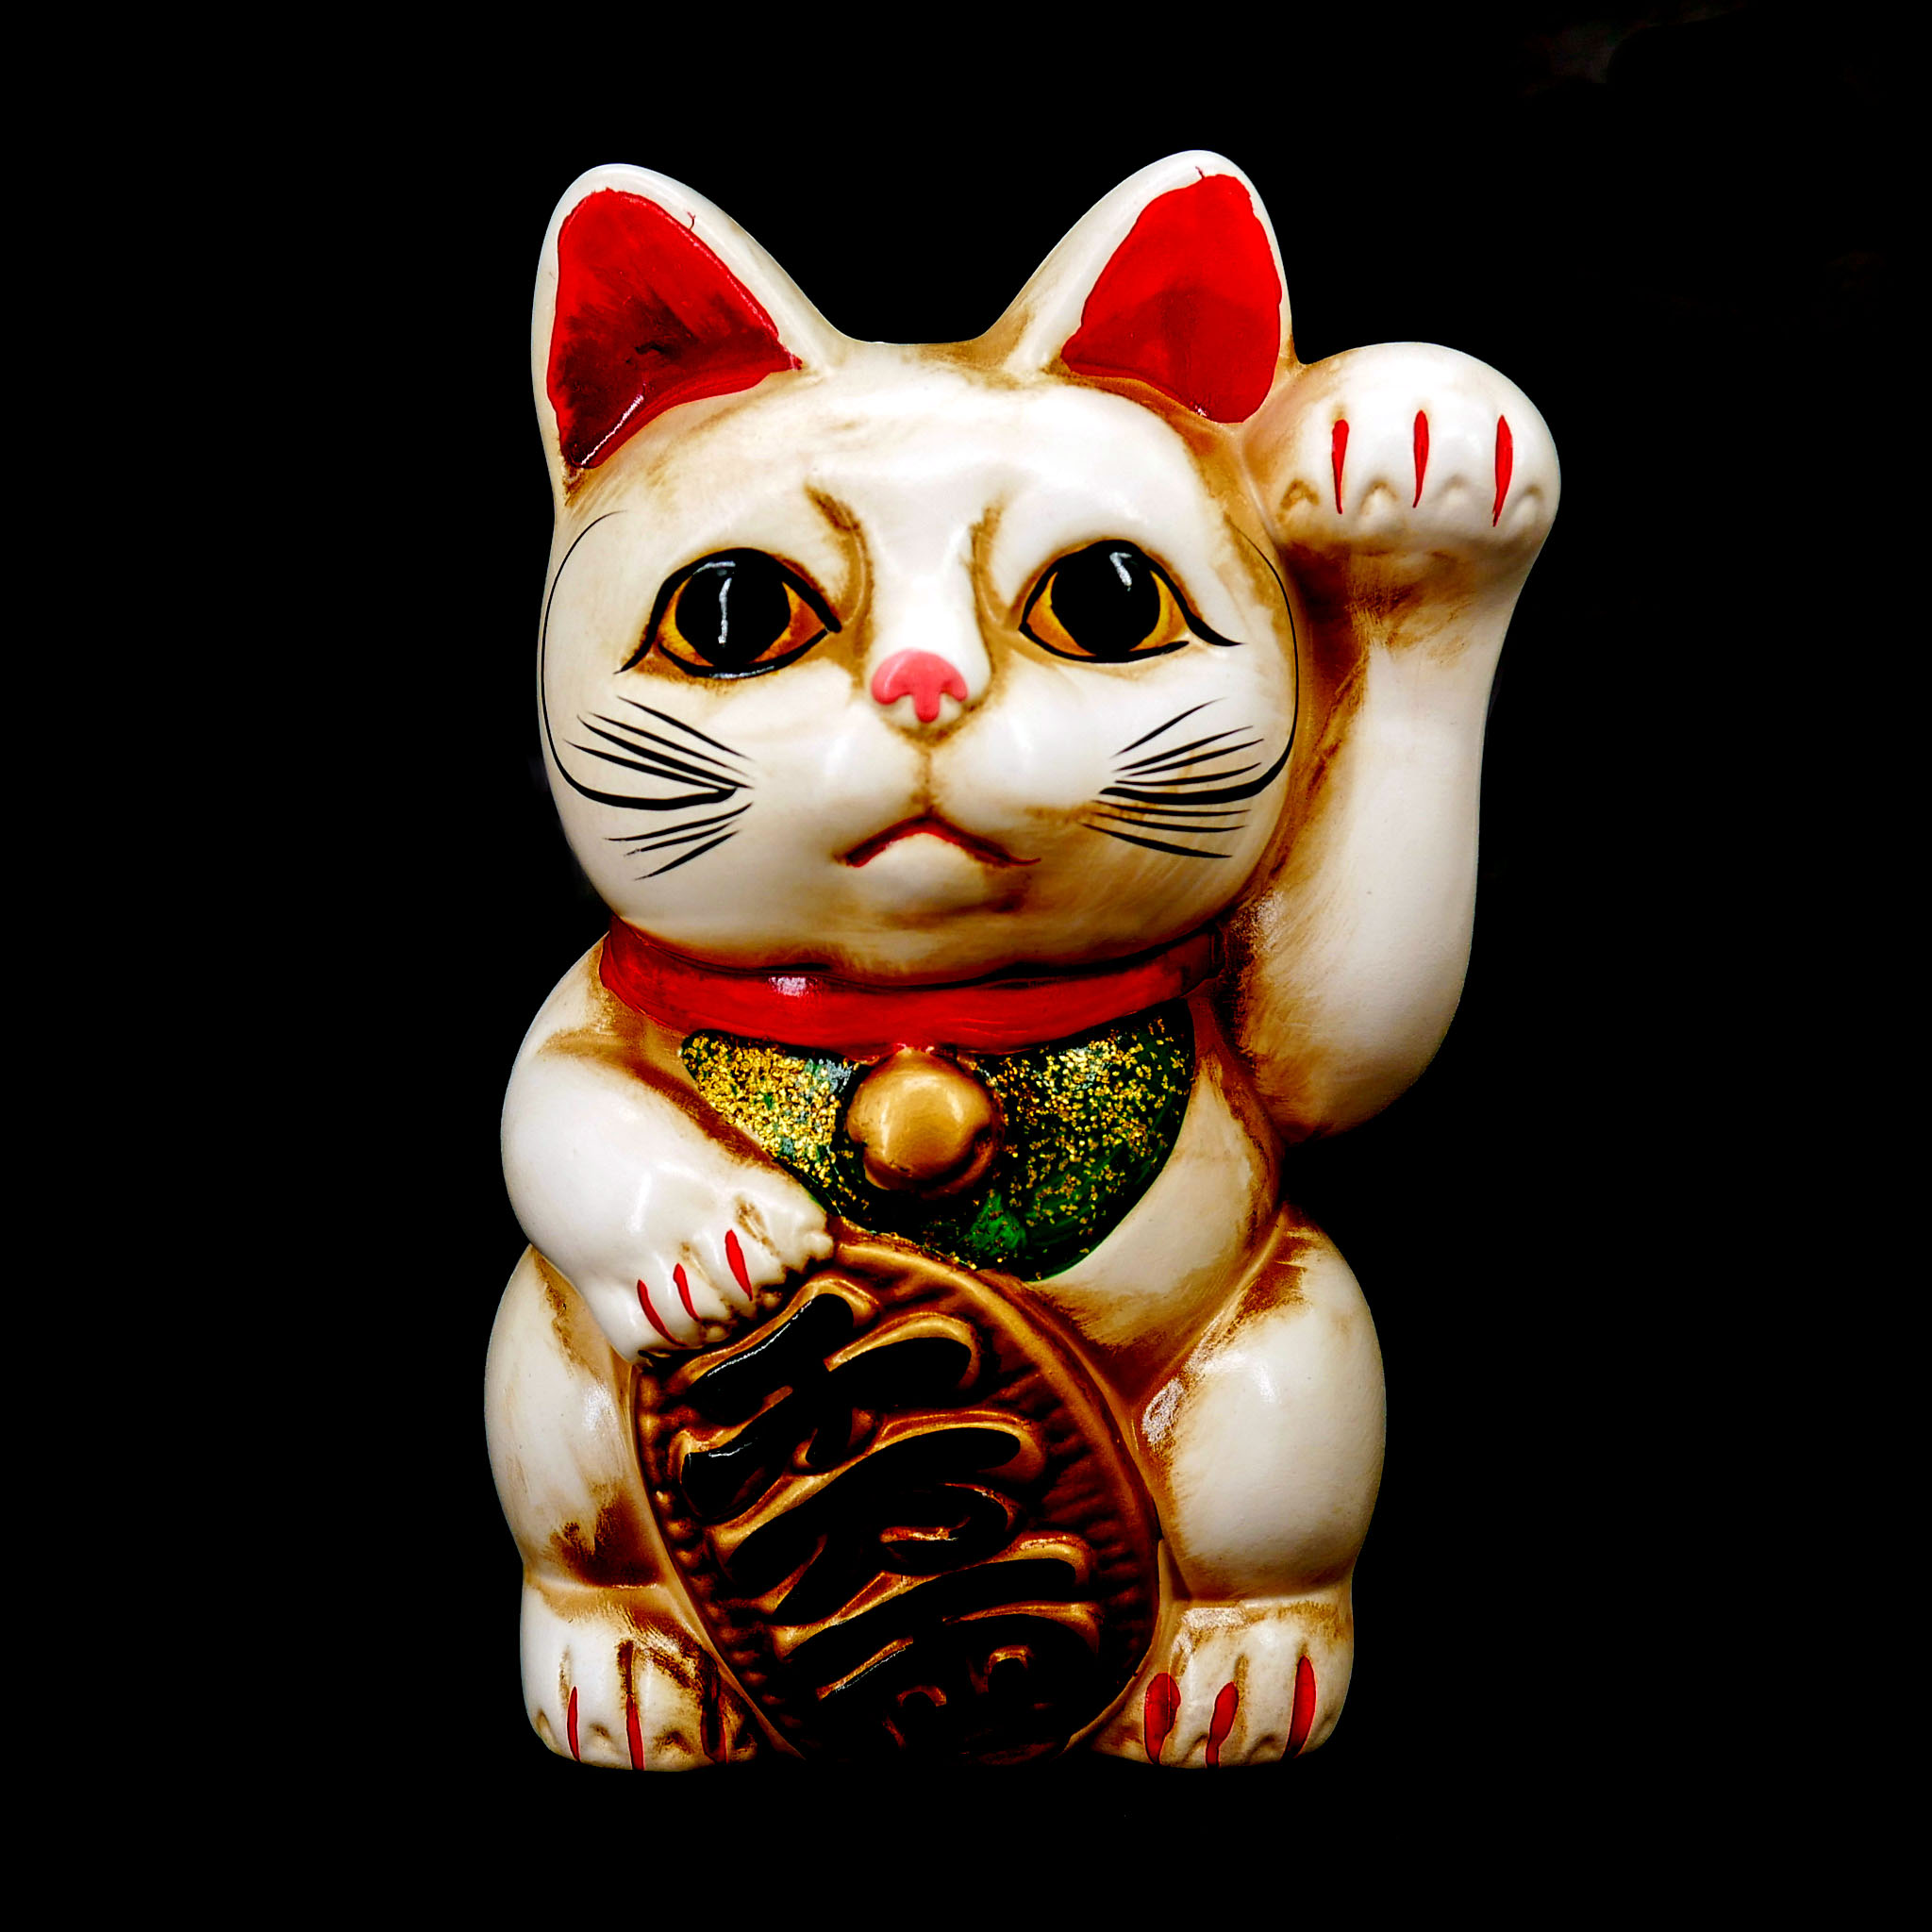 Chat manekineko porte-bonheur japonais en céramique - SHIROI NEKO